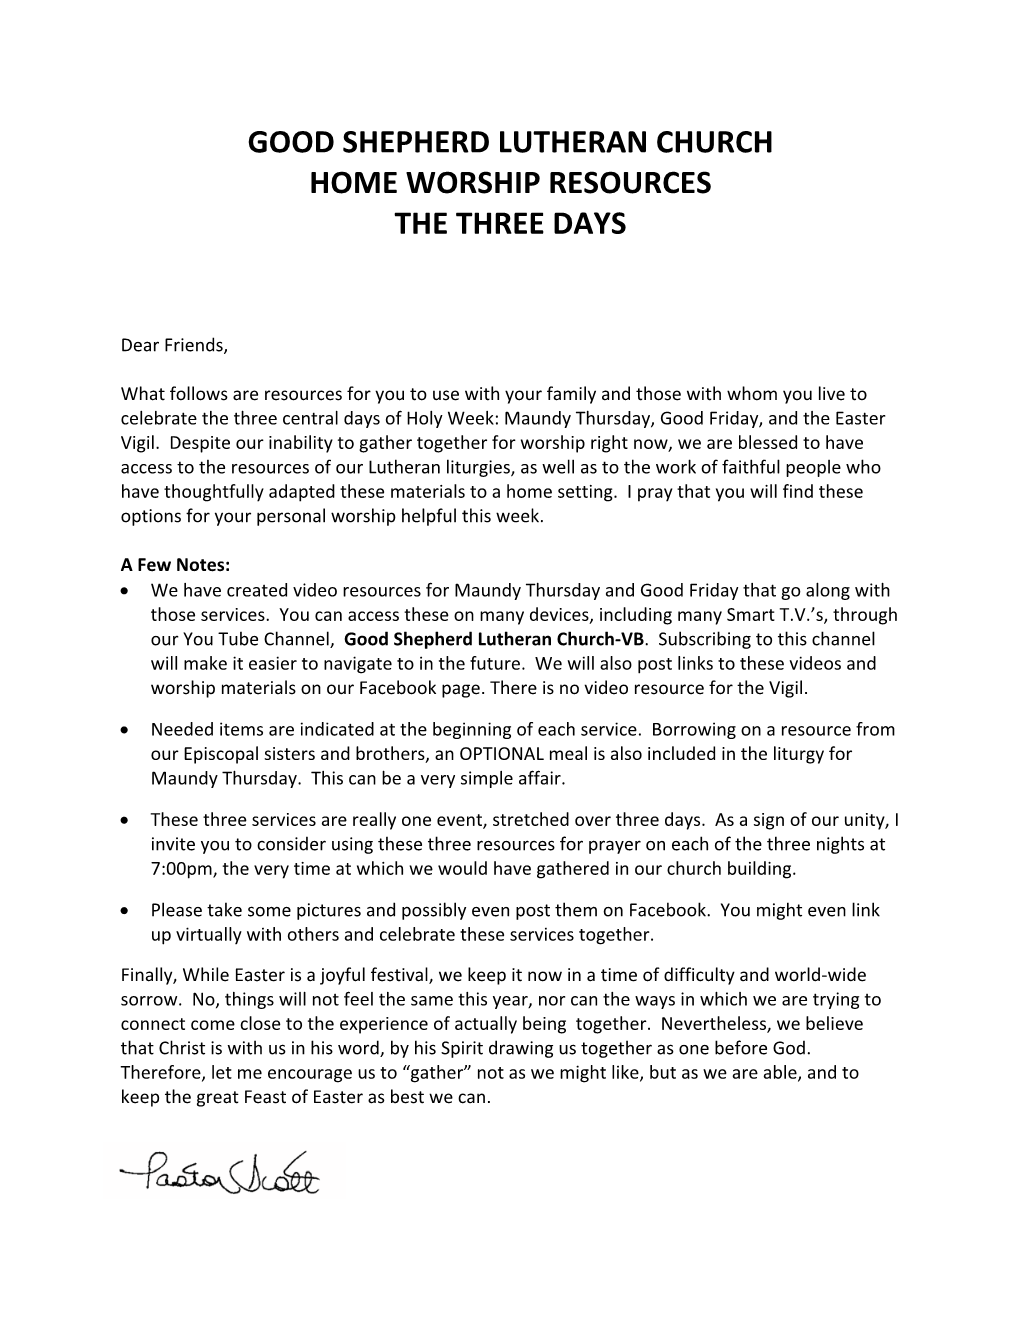 Good Shepherd Lutheran Church Home Worship Resources the Three Days